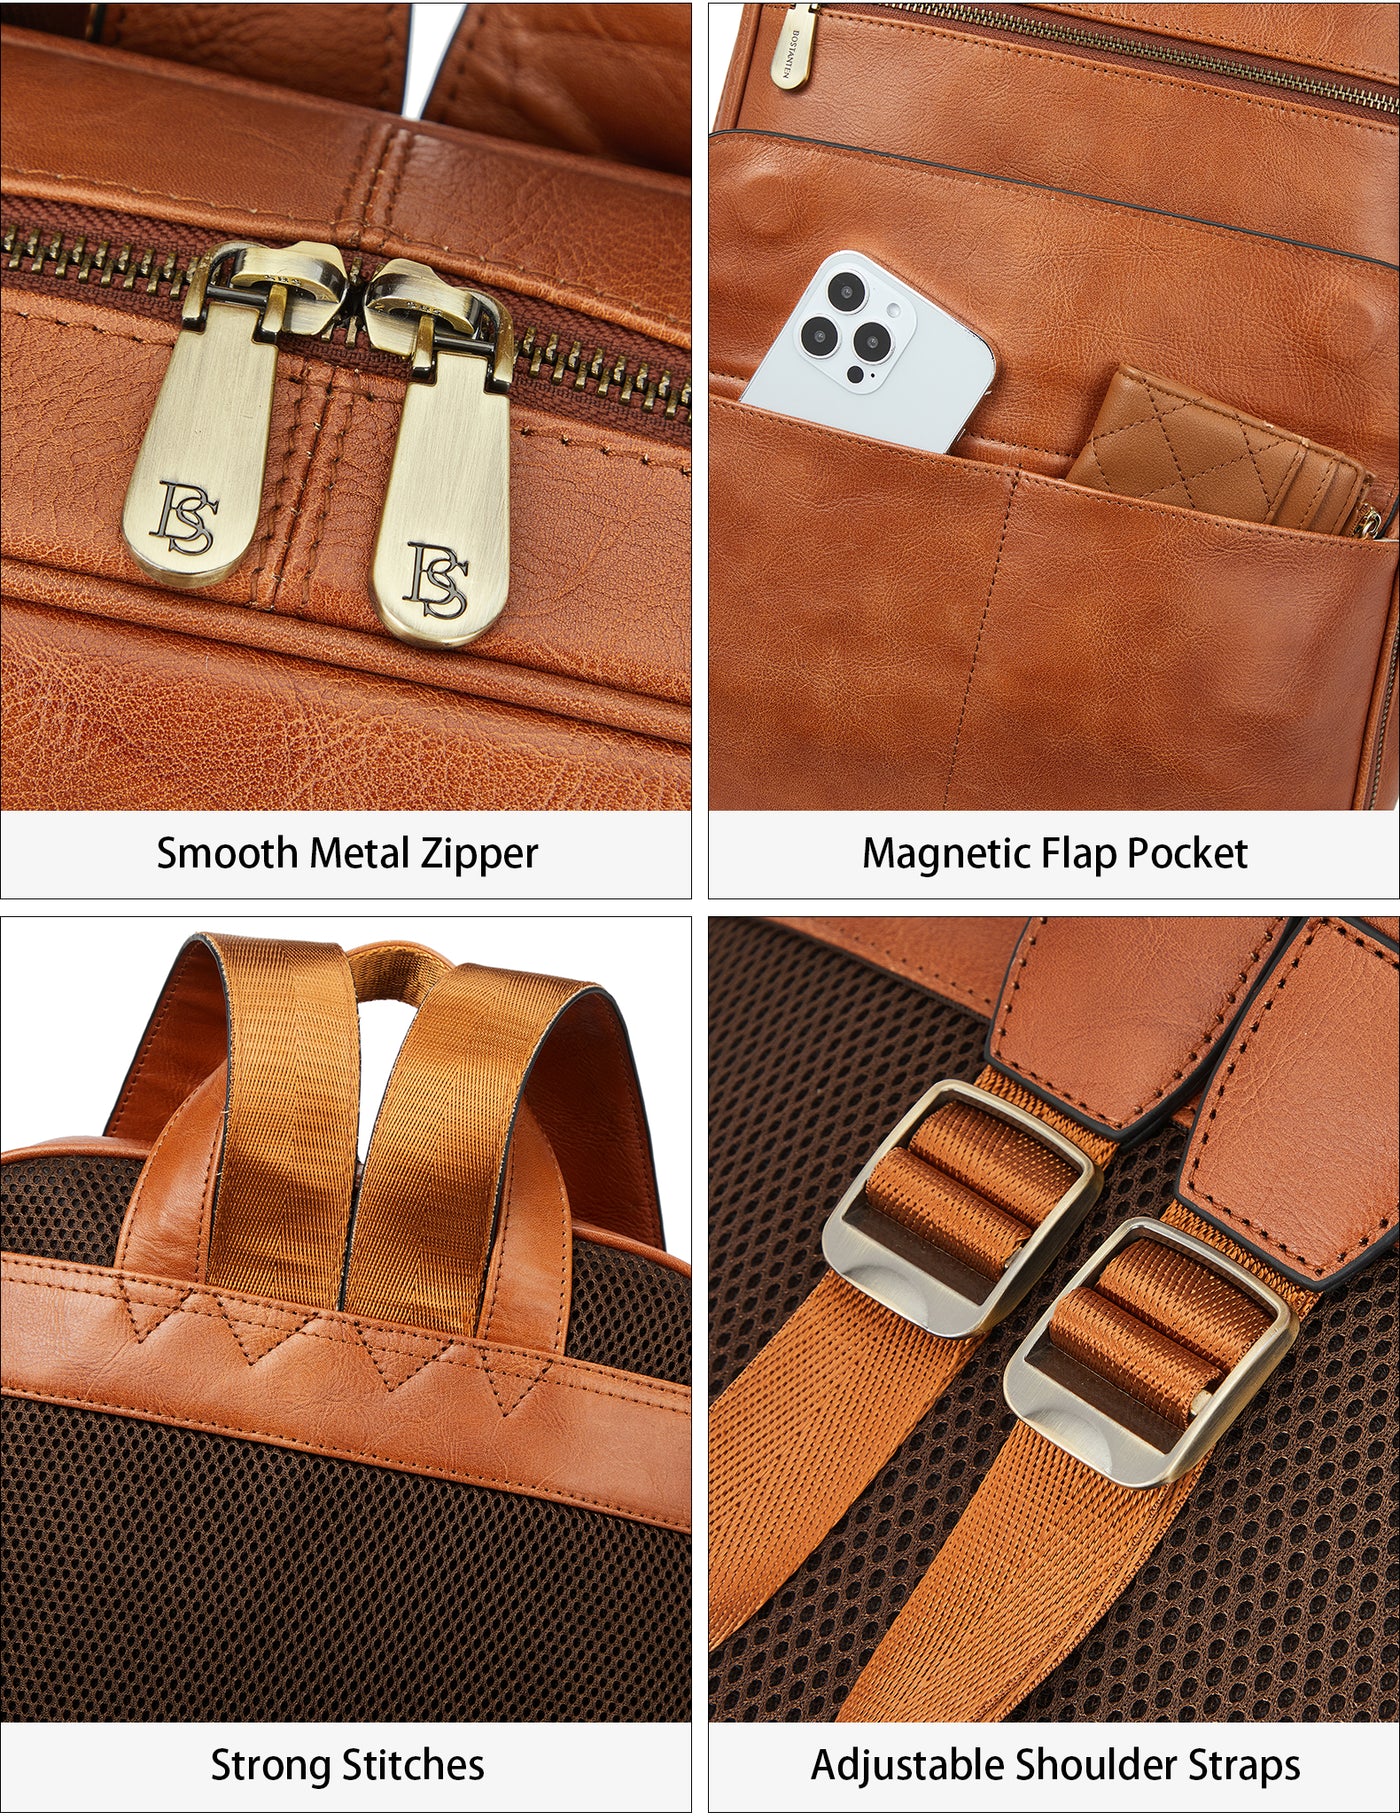 Slim Brown Leather 15.6 Inch Laptop Backpack for Men